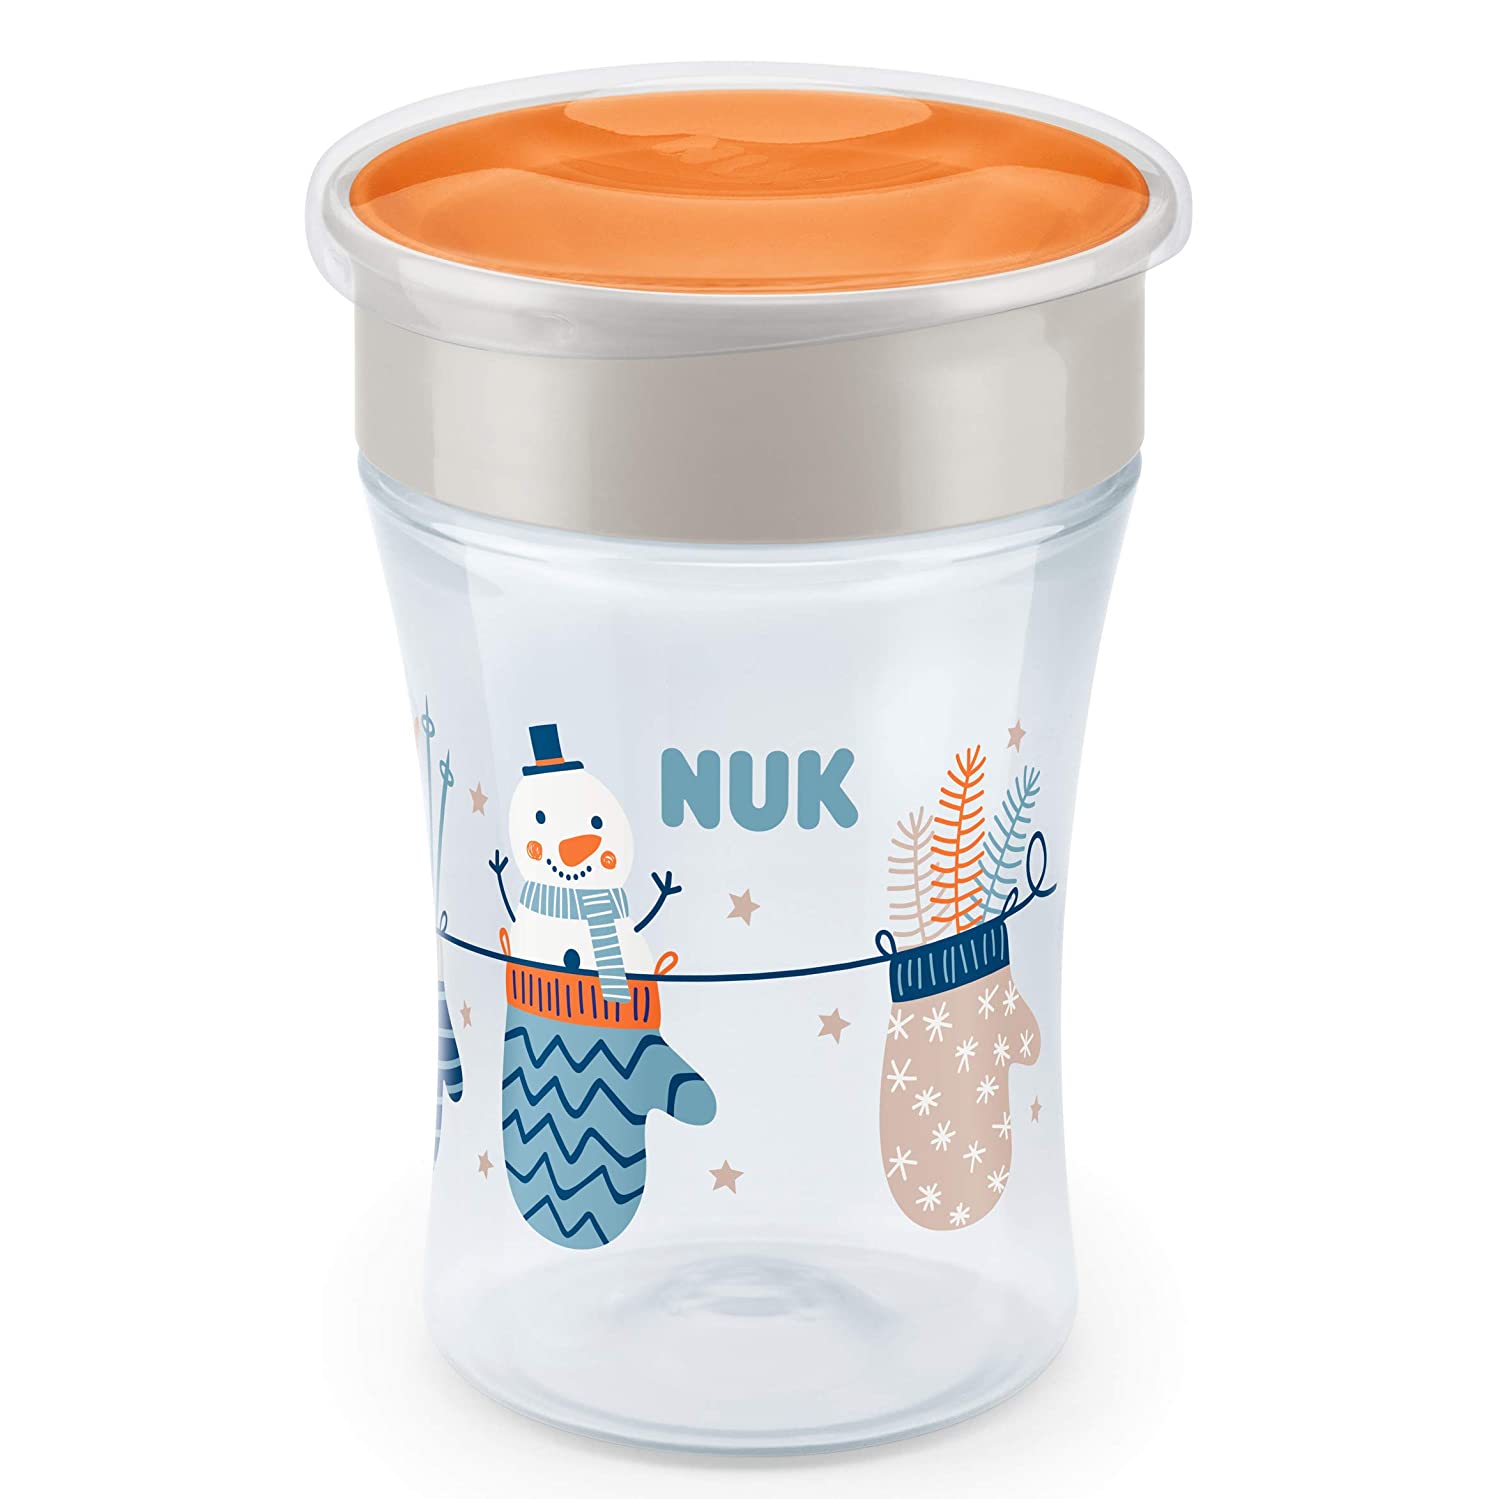 NUK Magic Drinking Cup Orange (winter edition)